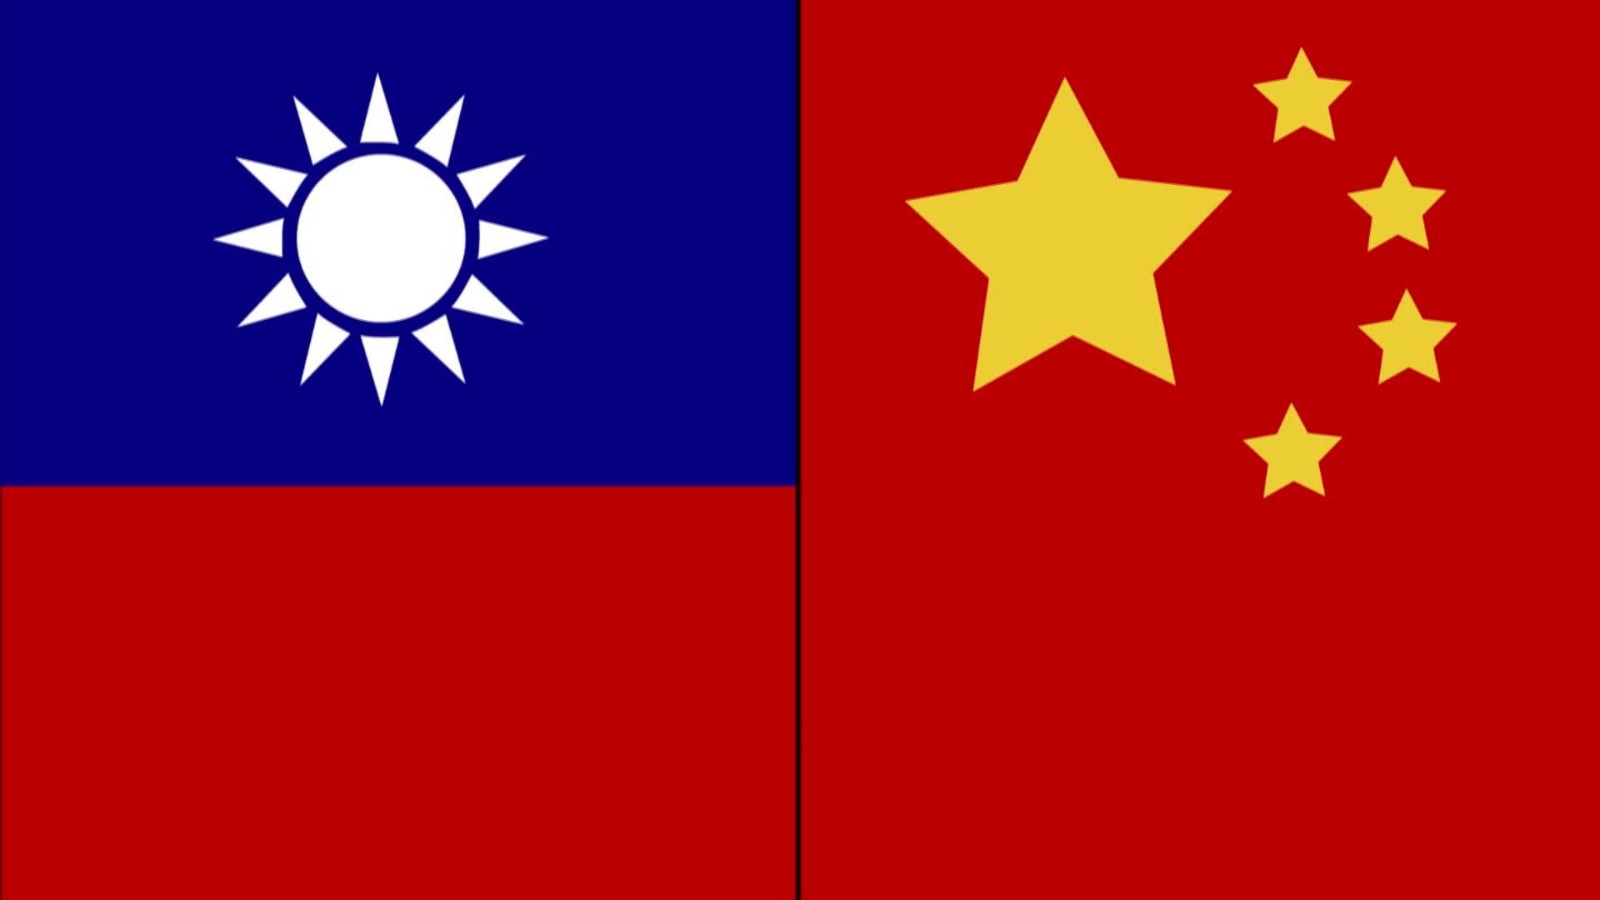 Taiwan’s China problem